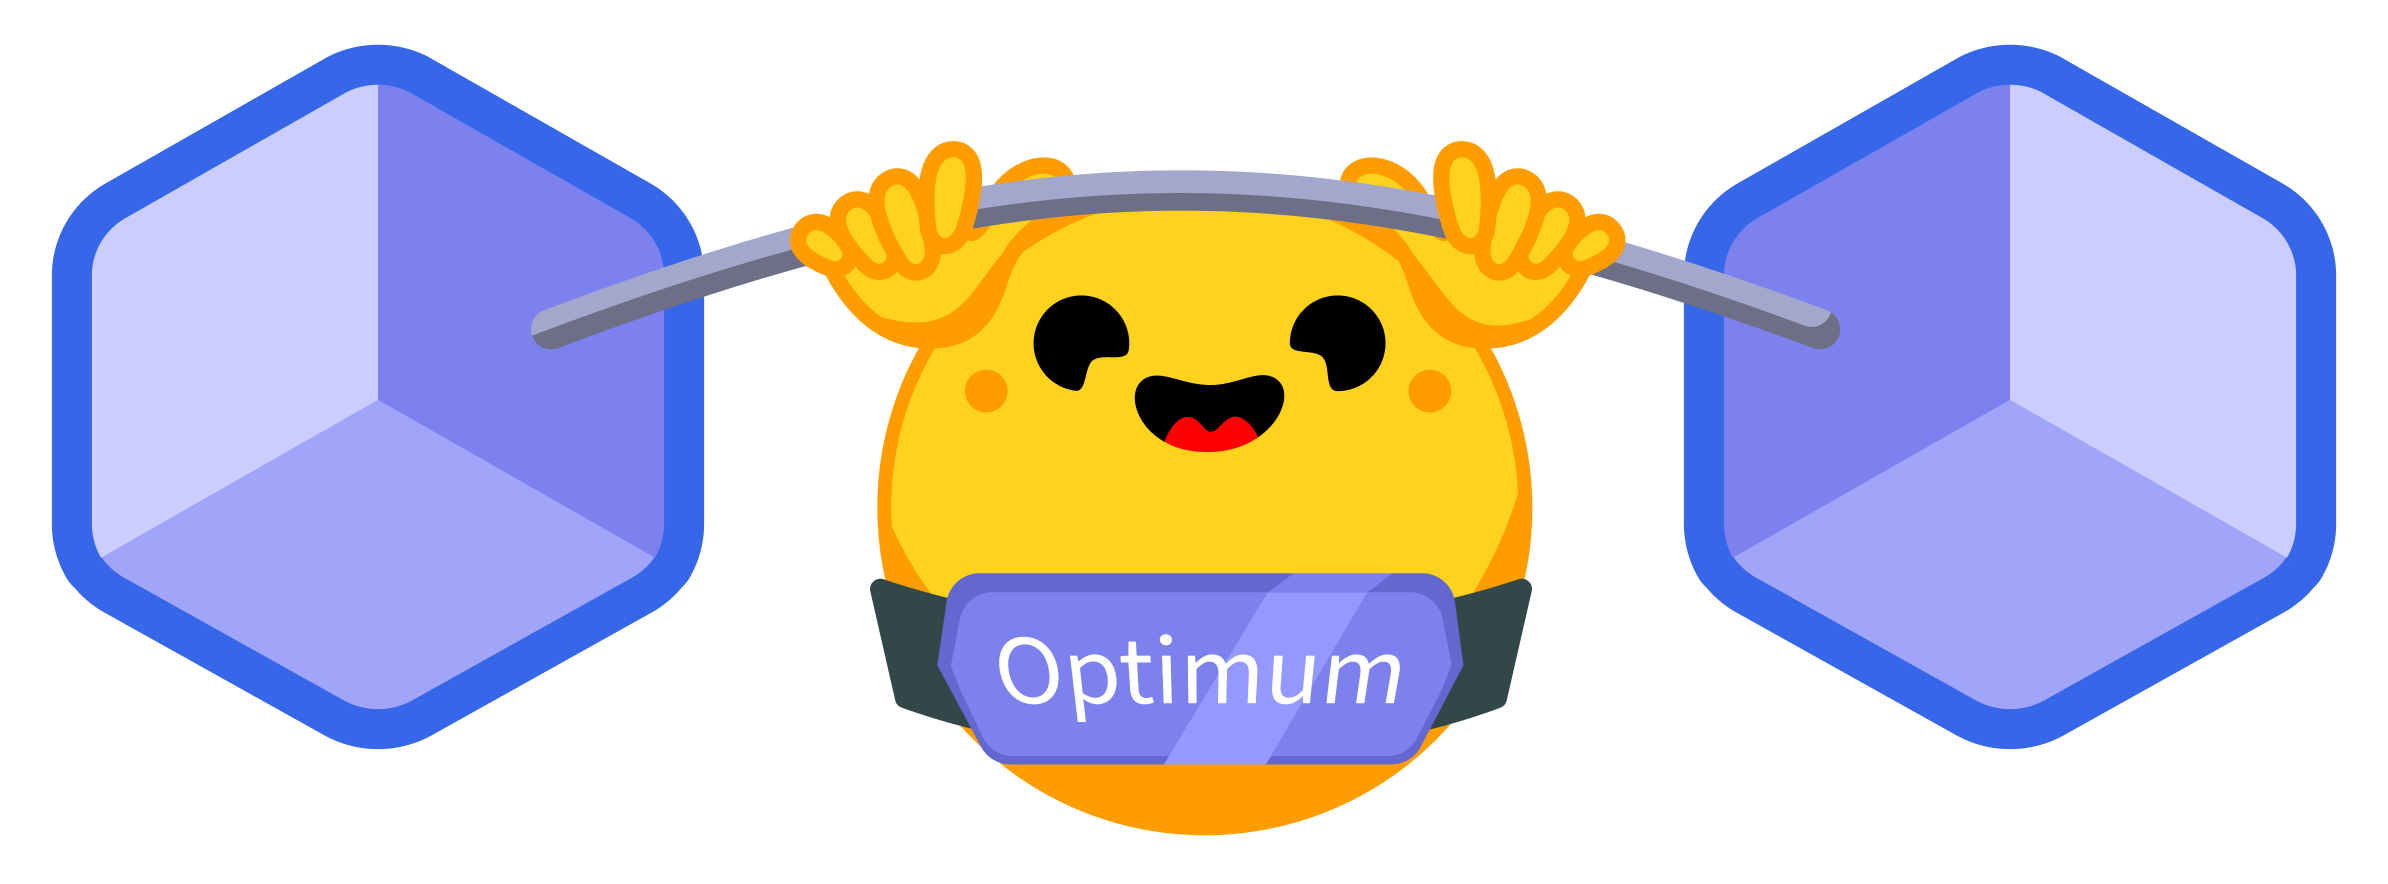 Optimum-Benchmark Logo